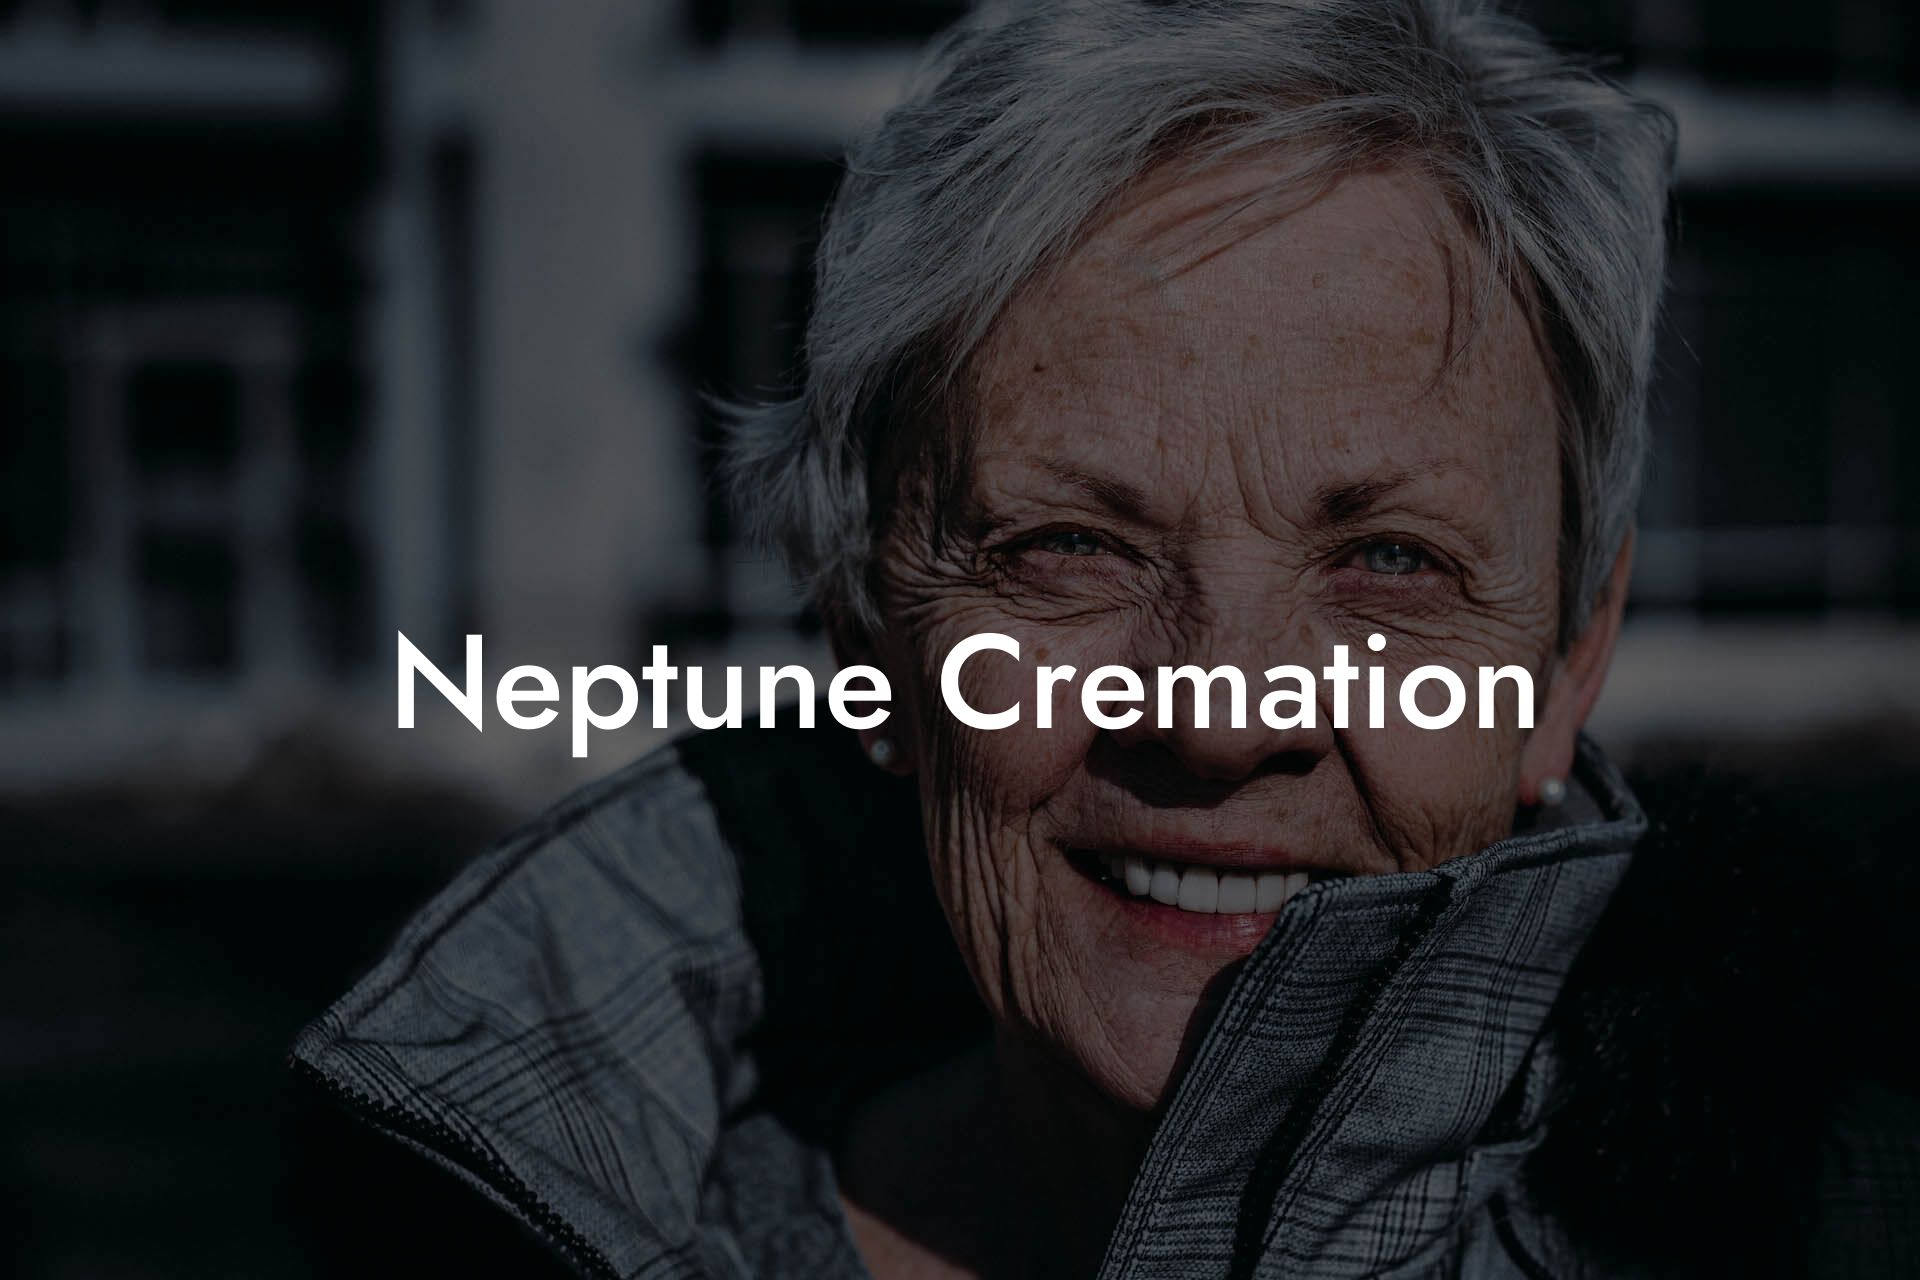 Neptune Cremation